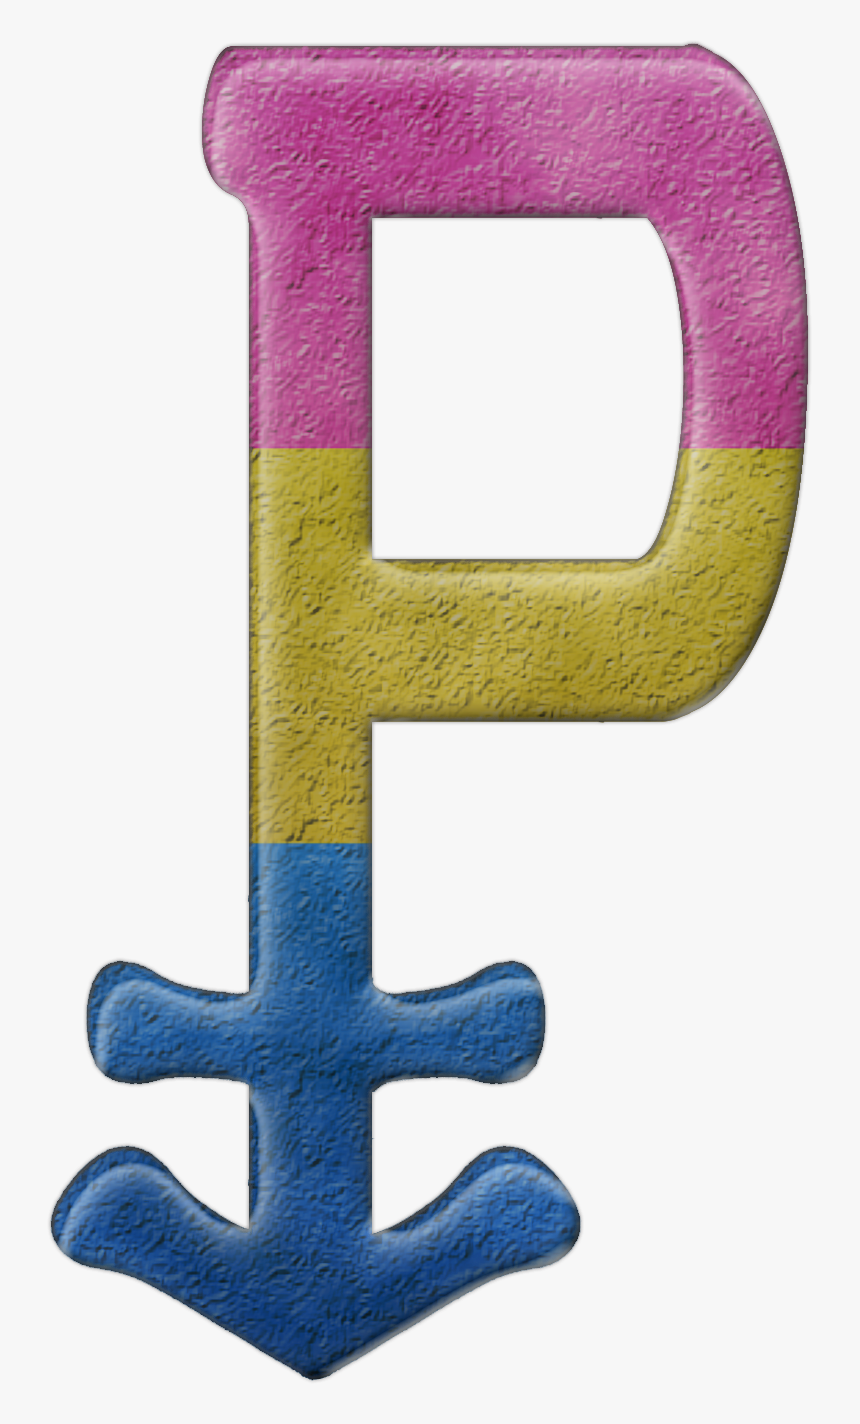 Pansexual Pride “p” Symbol In 